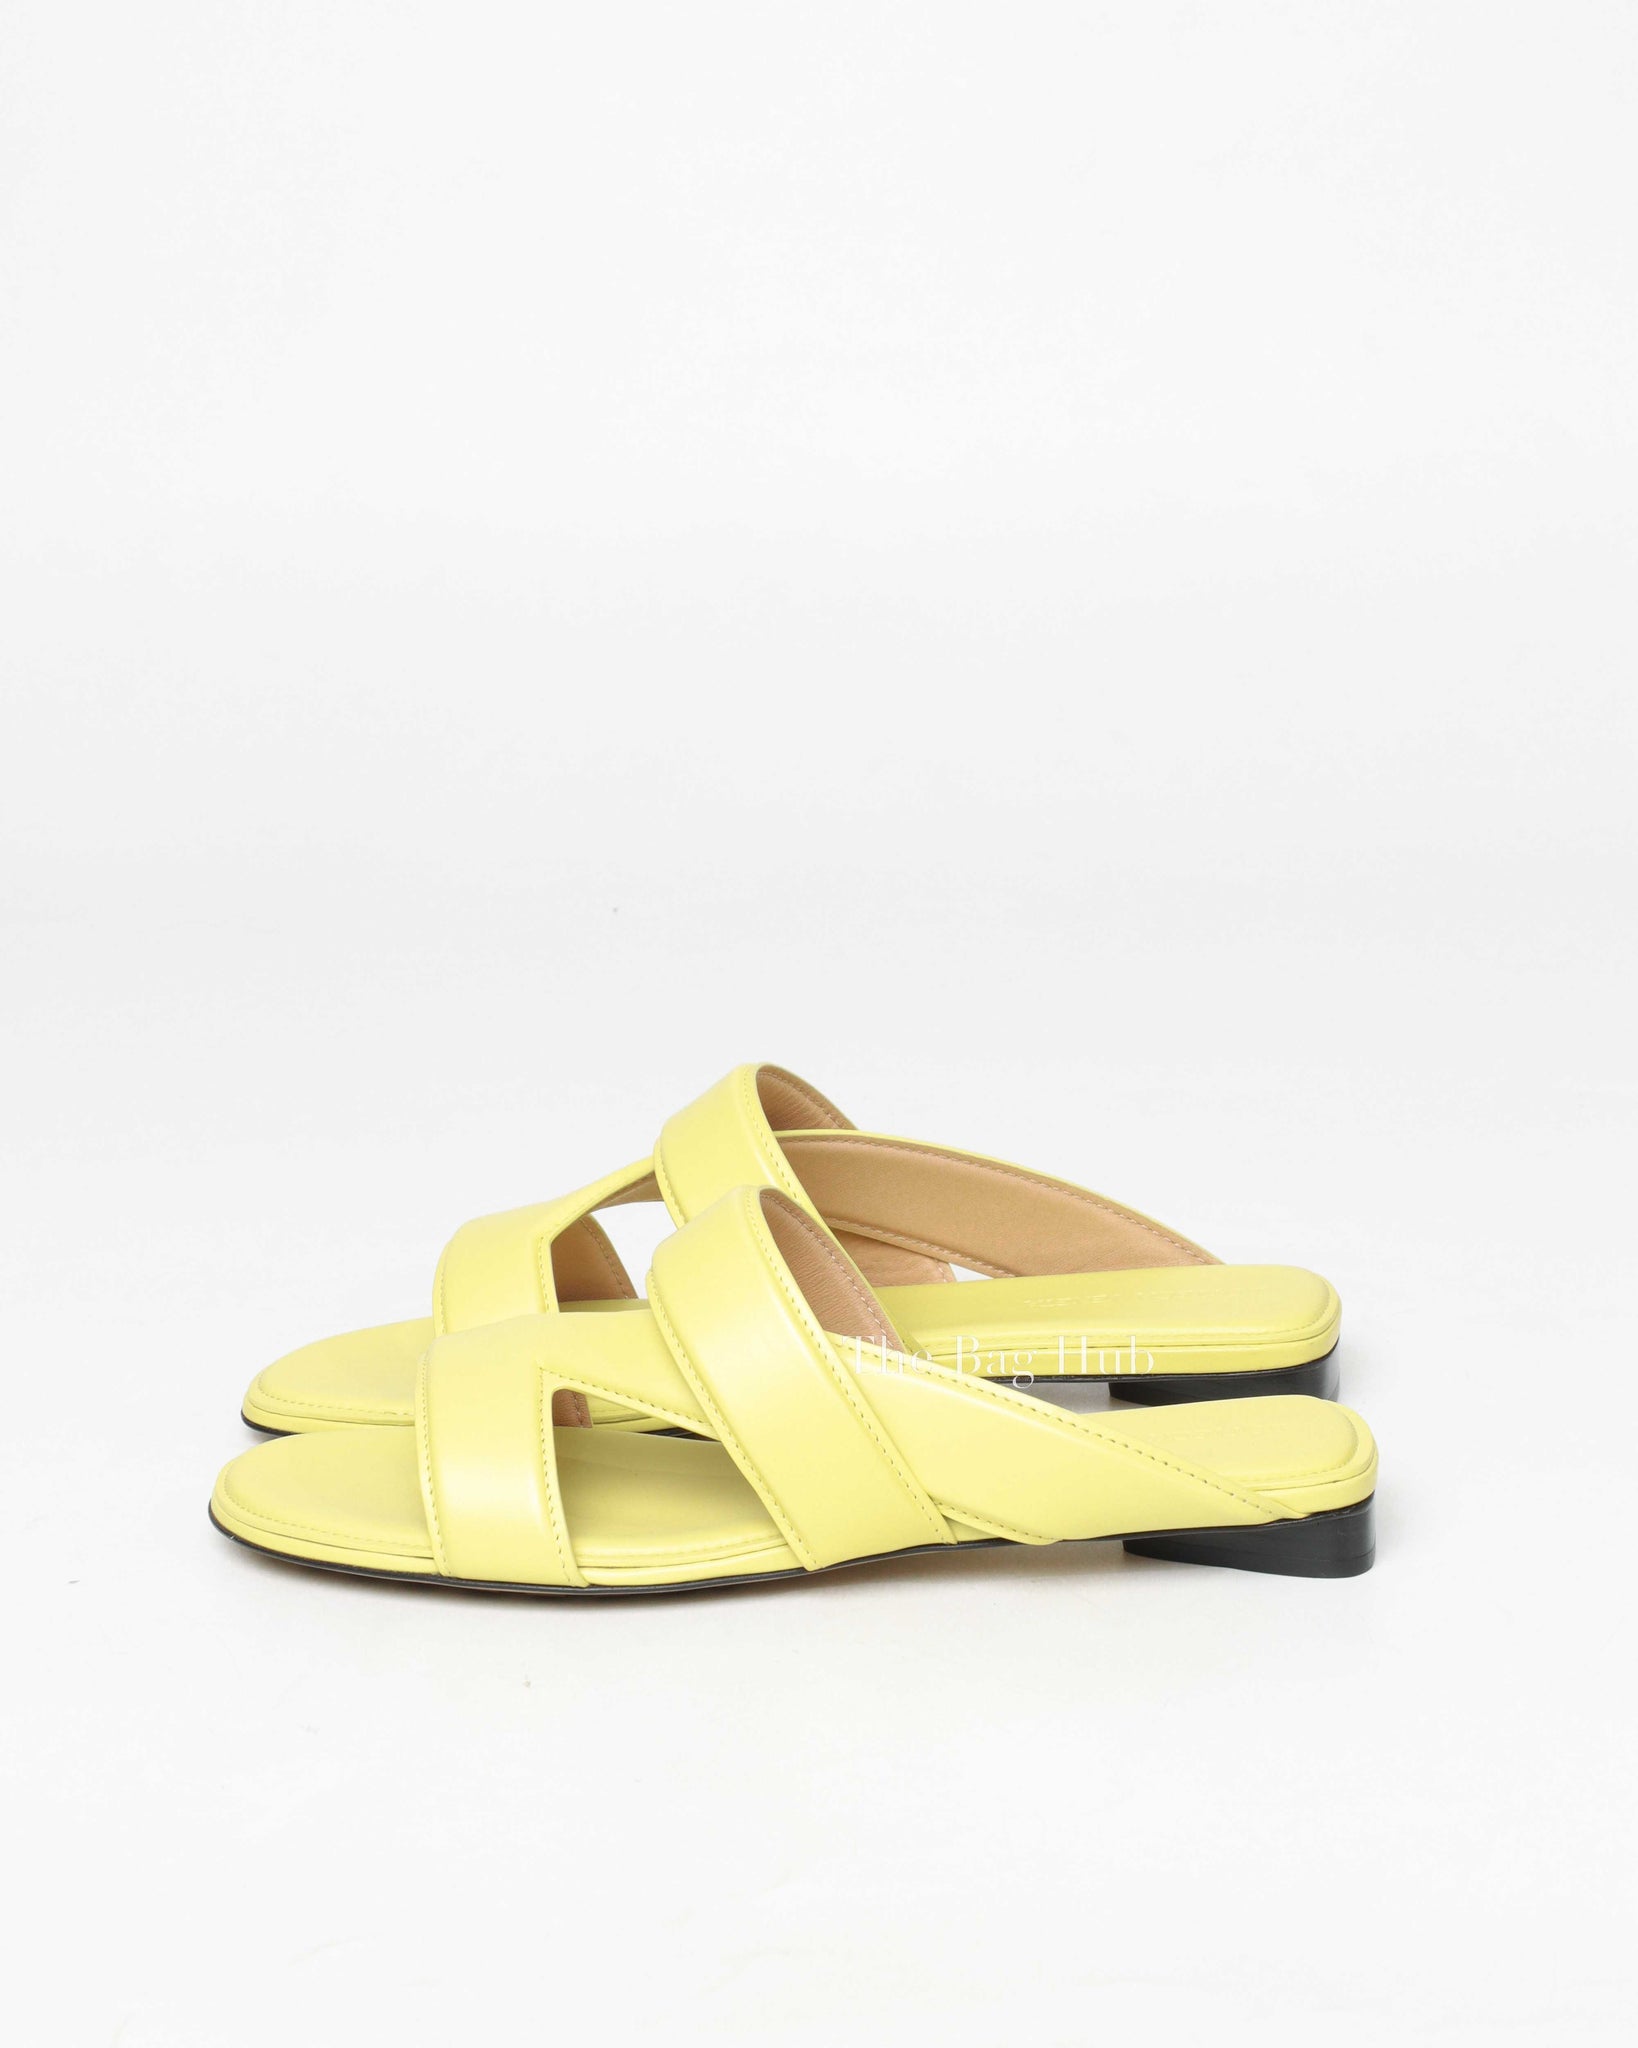 Bottega Veneta Light Yellow Leather Band Flat Sandals Size 38-6